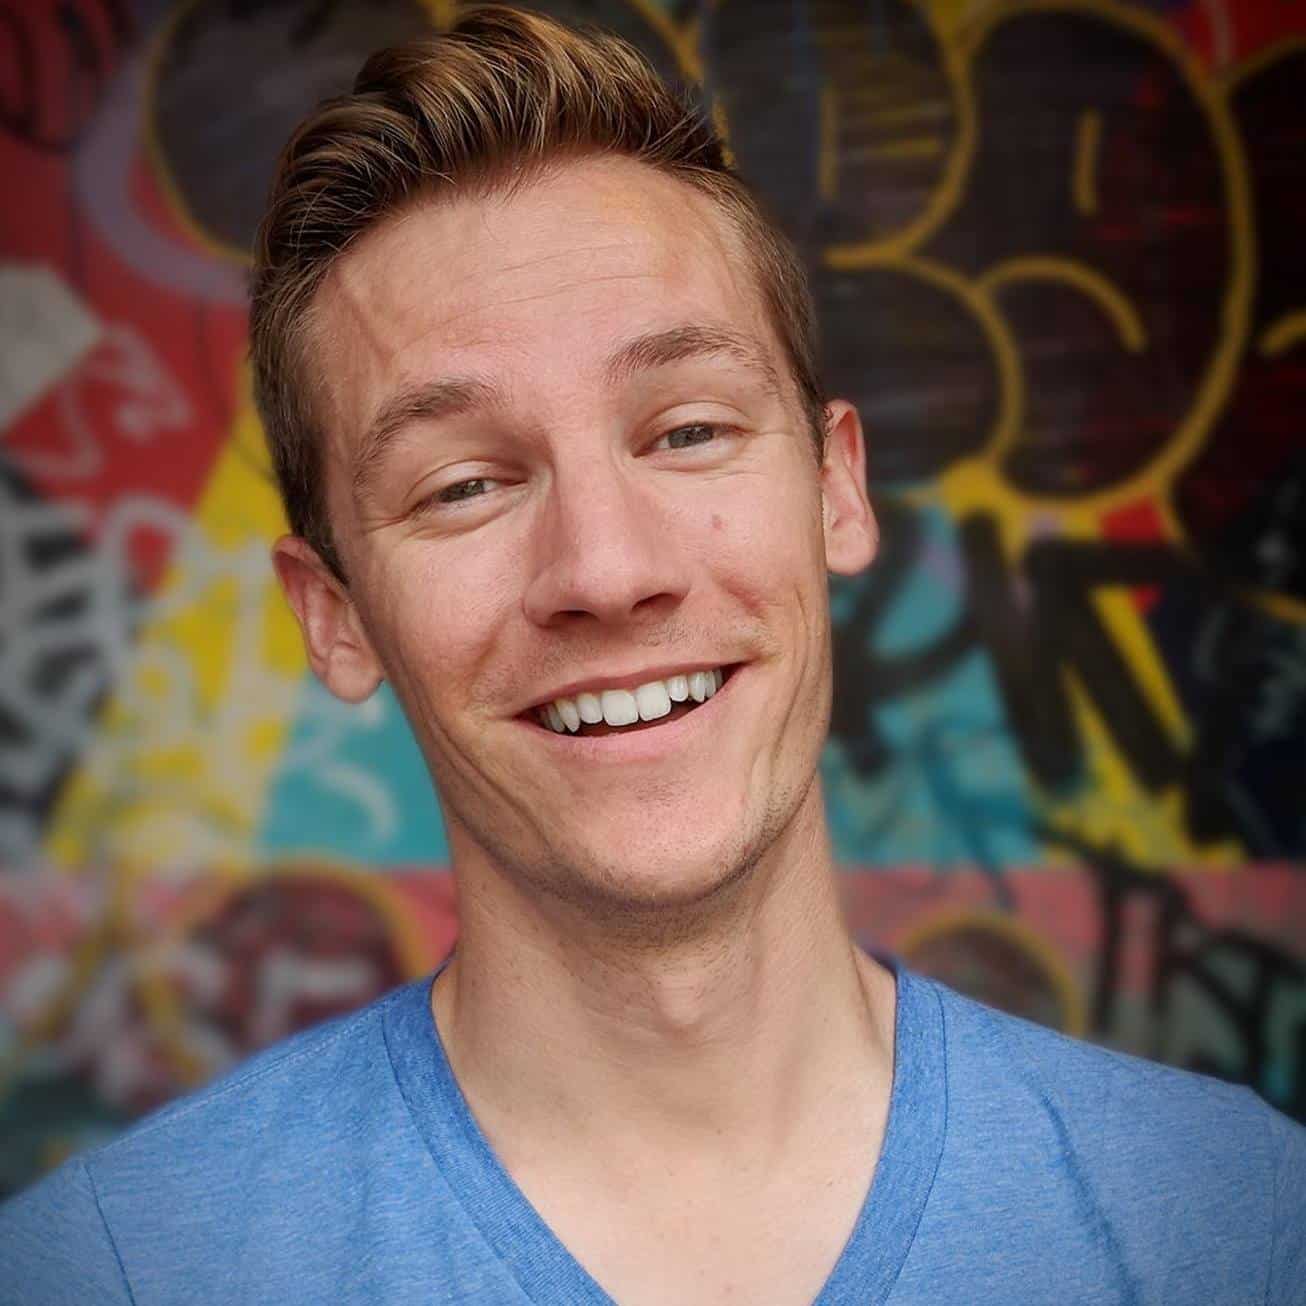 Portrait of Nate Bauer smiling.